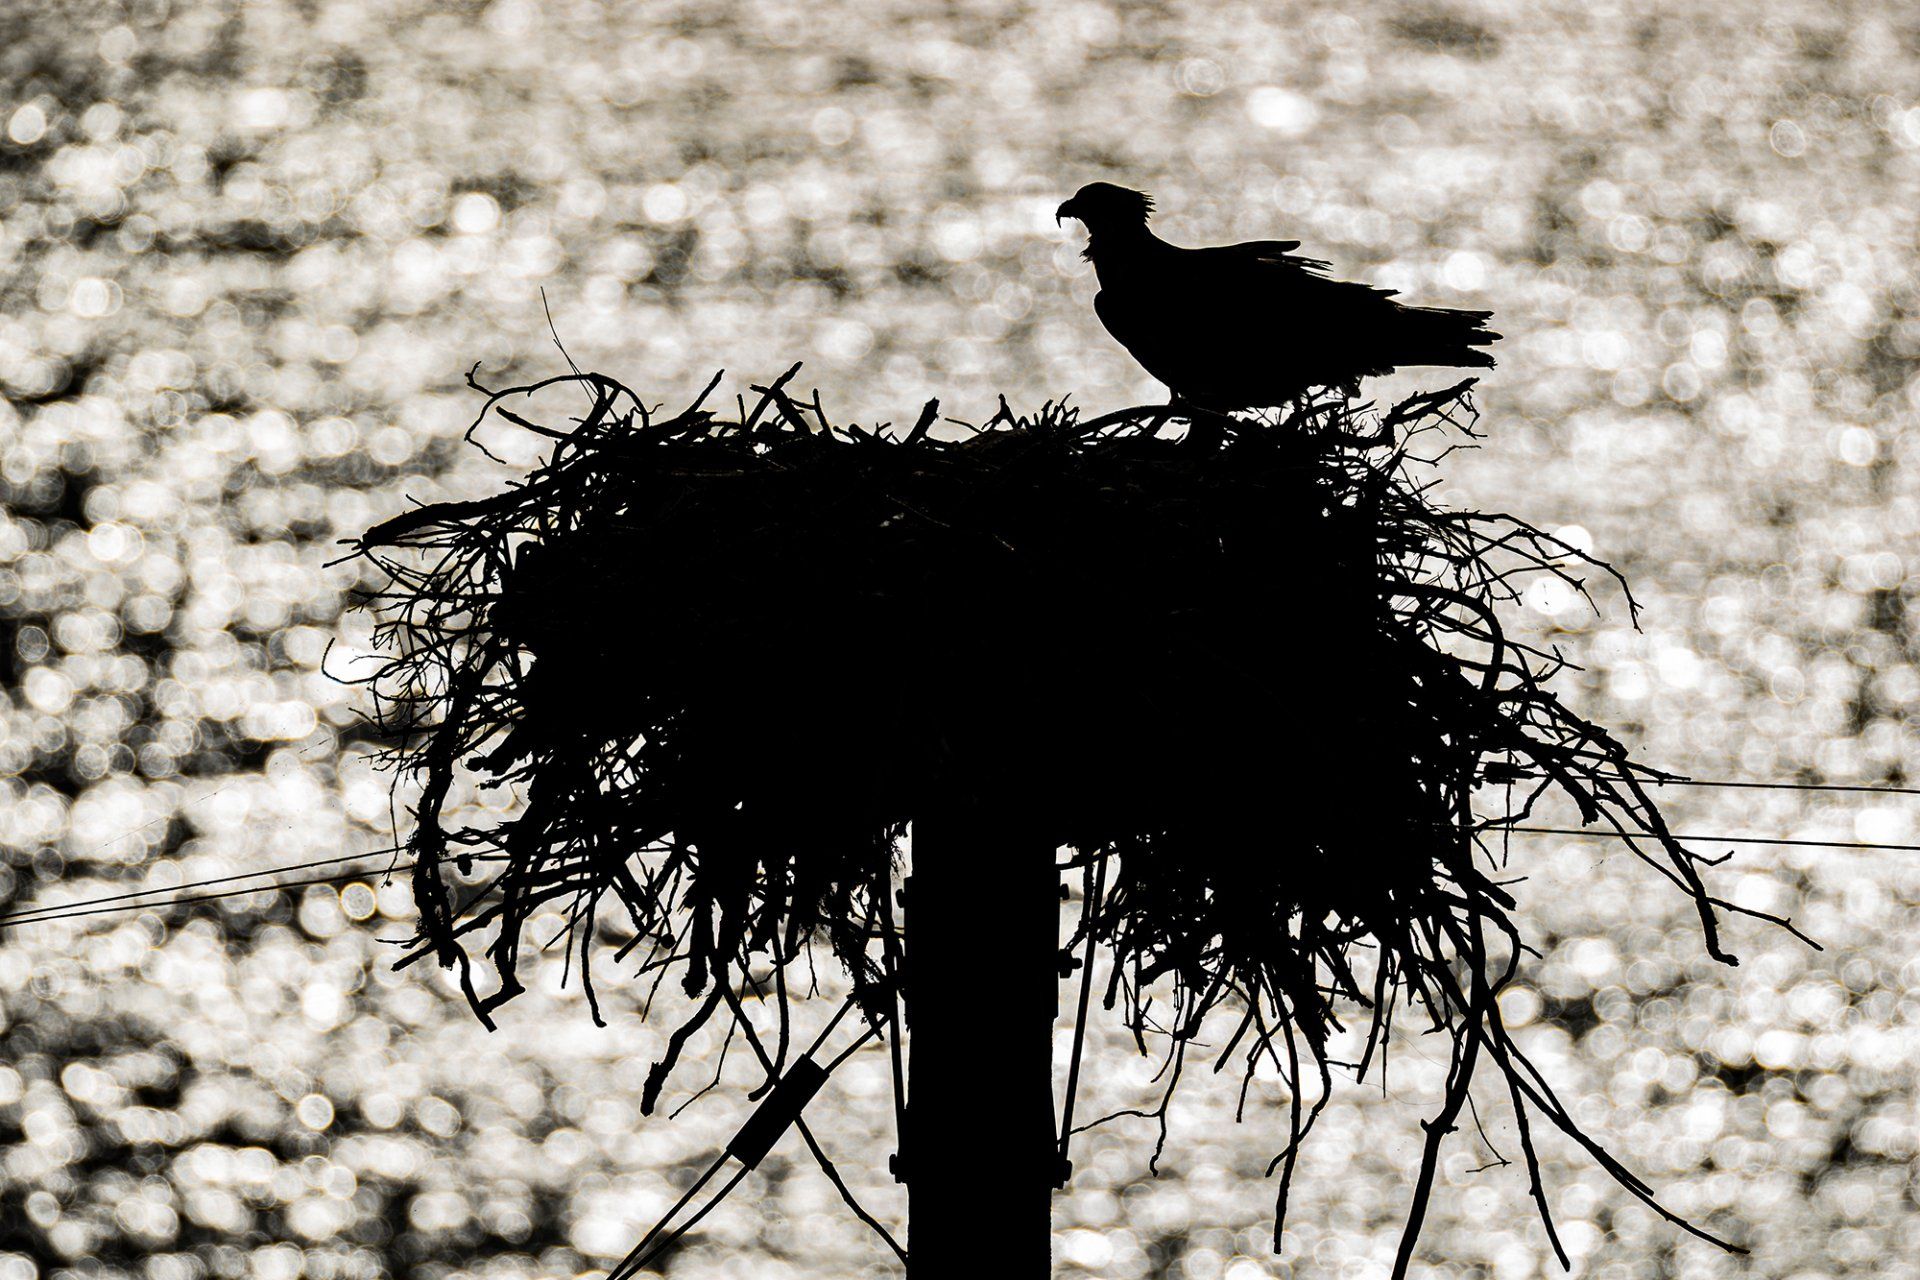 Osprey on its nest, Lake Berryessa, California